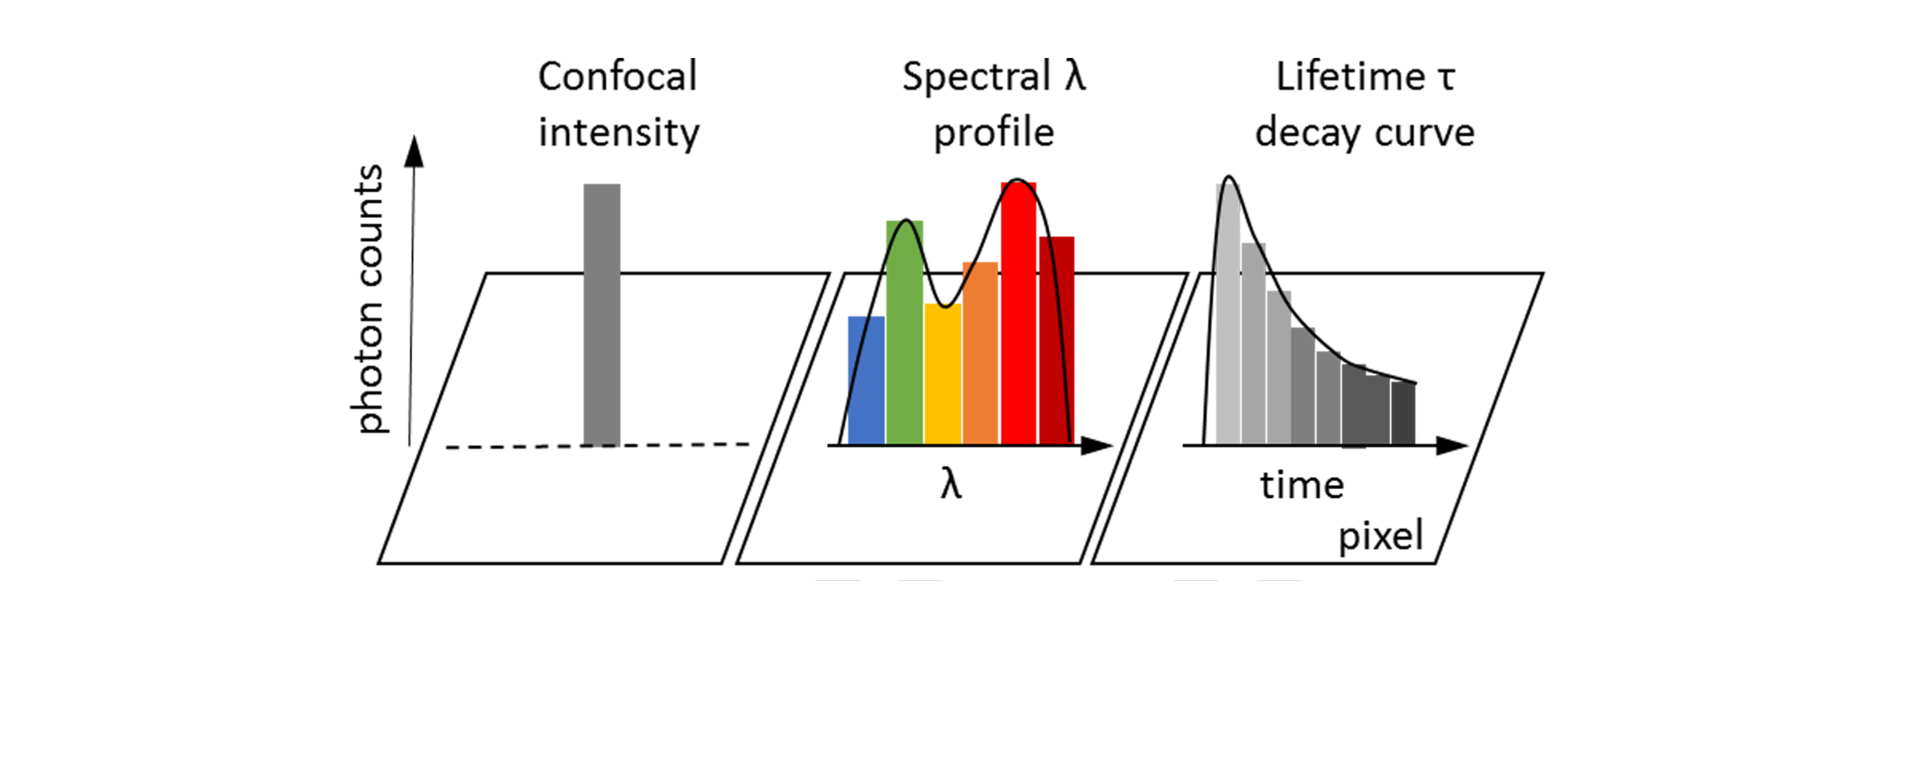 Single pixel information - Comparison between standard confocal, spectral, and flim imaging modes